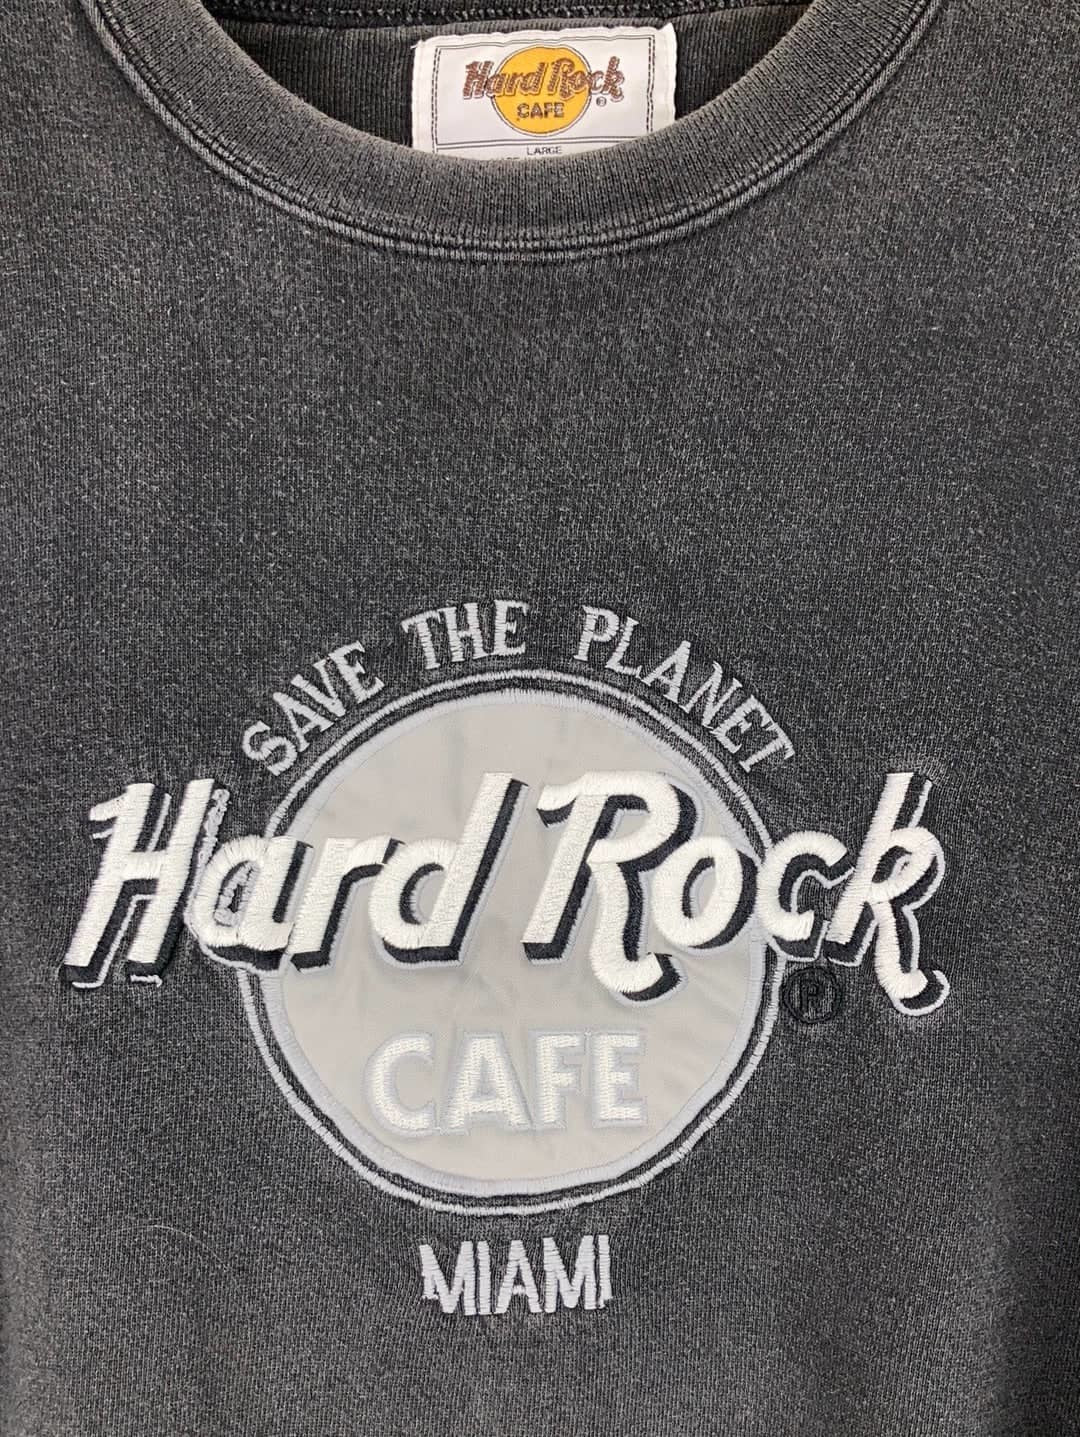 Hard Rock Cafe „Miami“ Sweater (L)